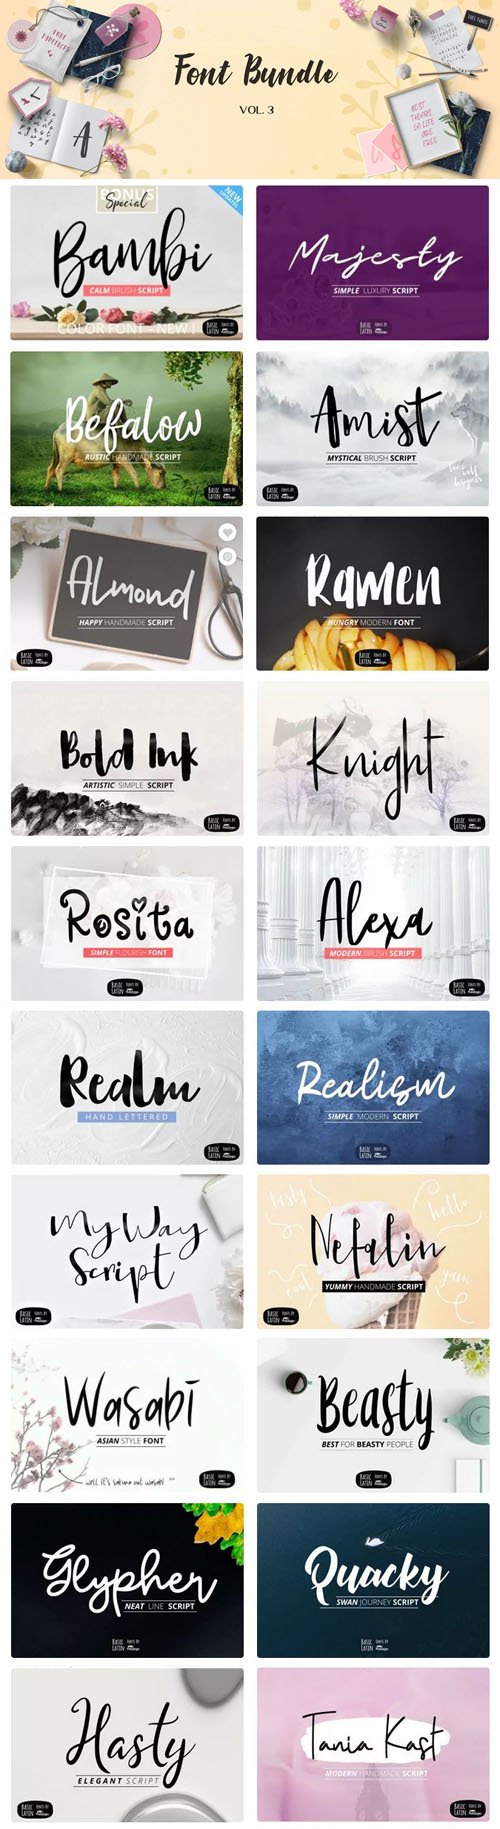 Amazing Font Bundle - 20 New Fonts Collection